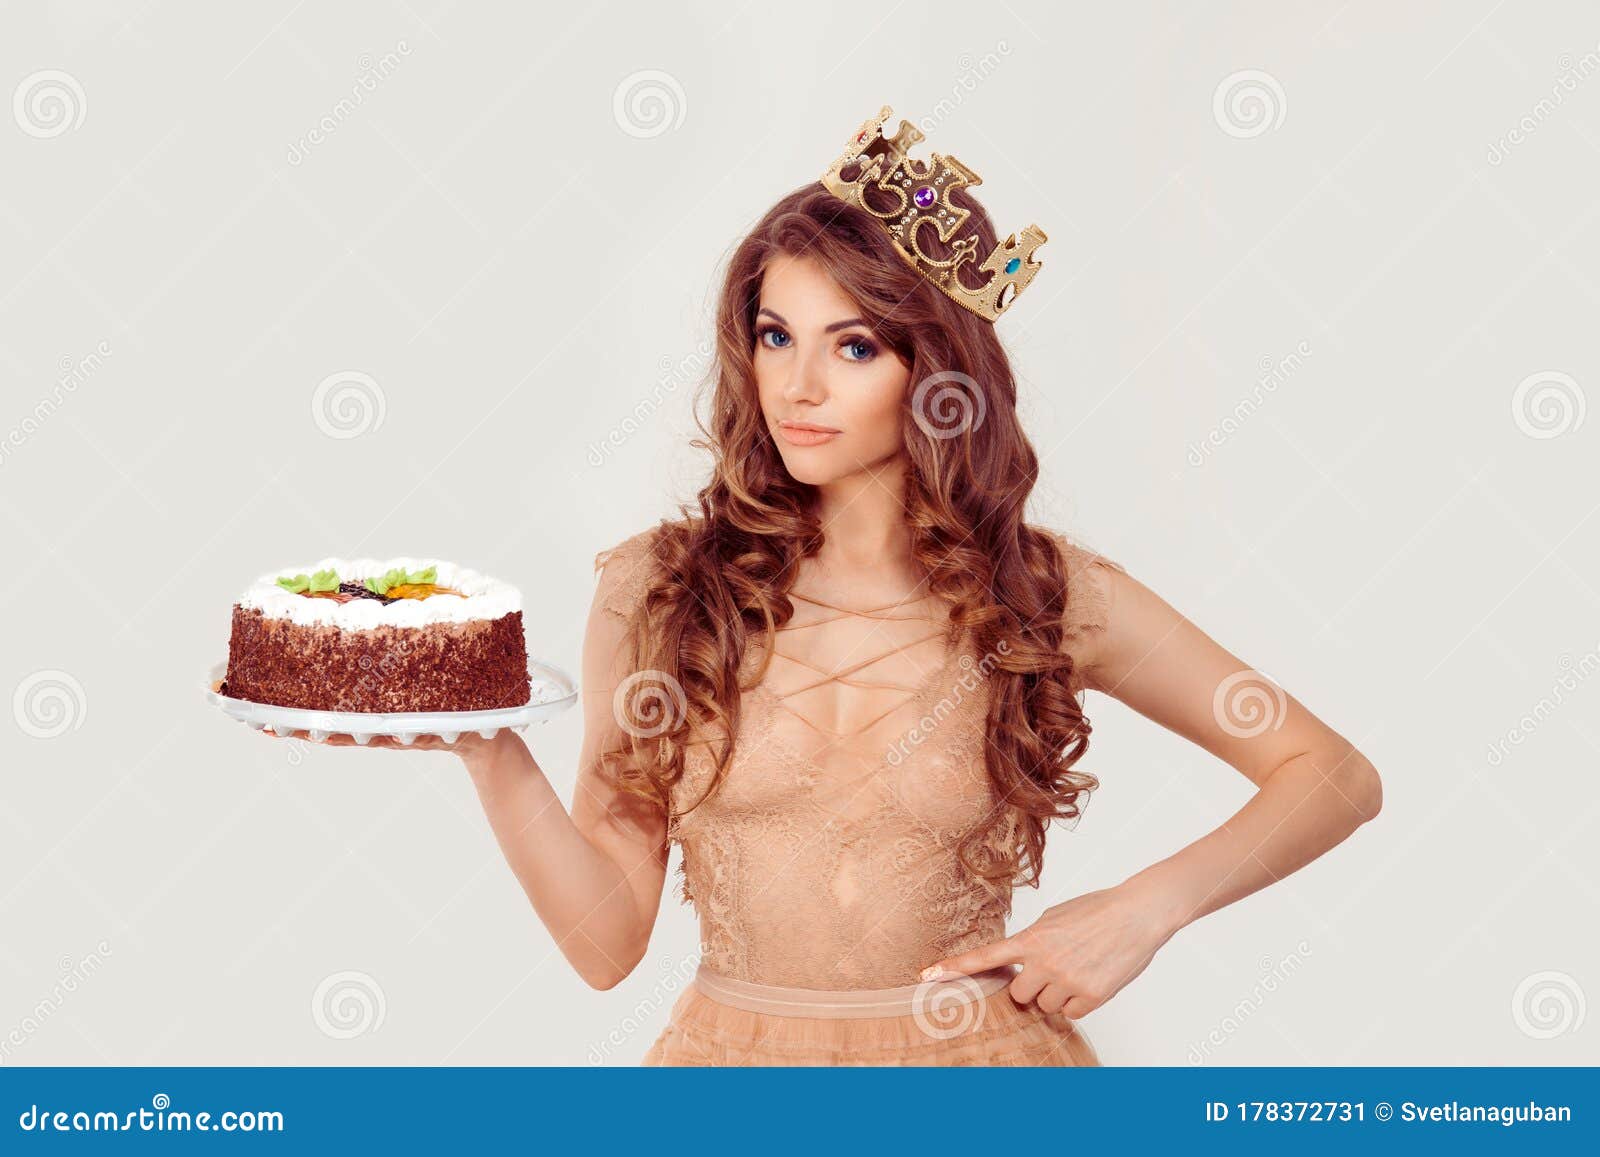 naked girl with birthday cake sex photo